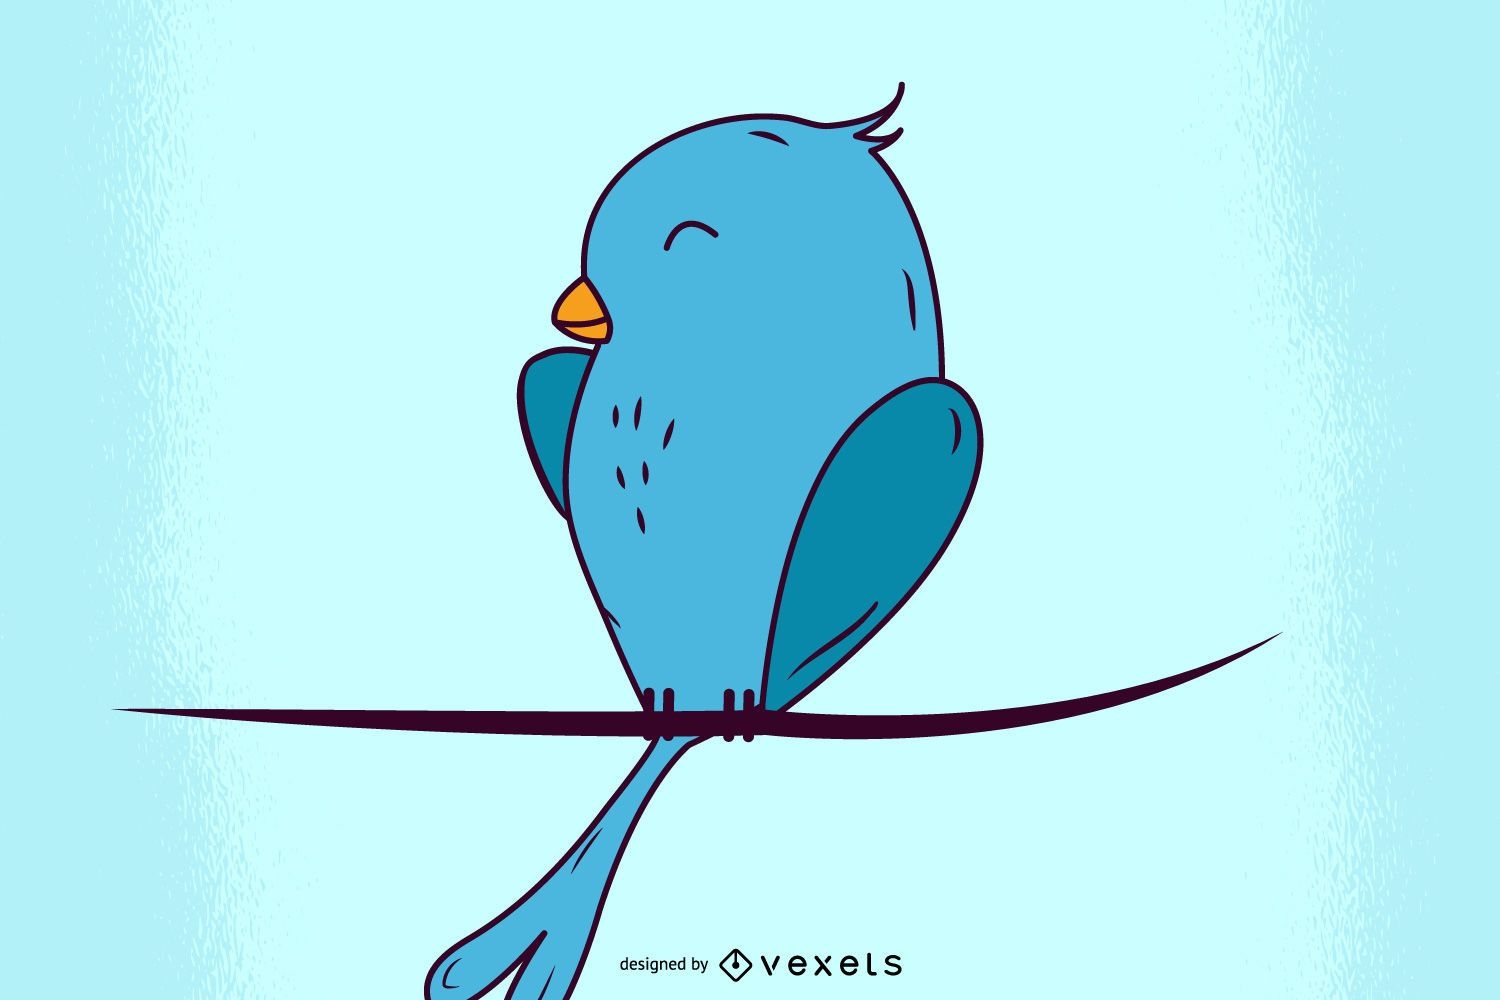 blue birds drawing